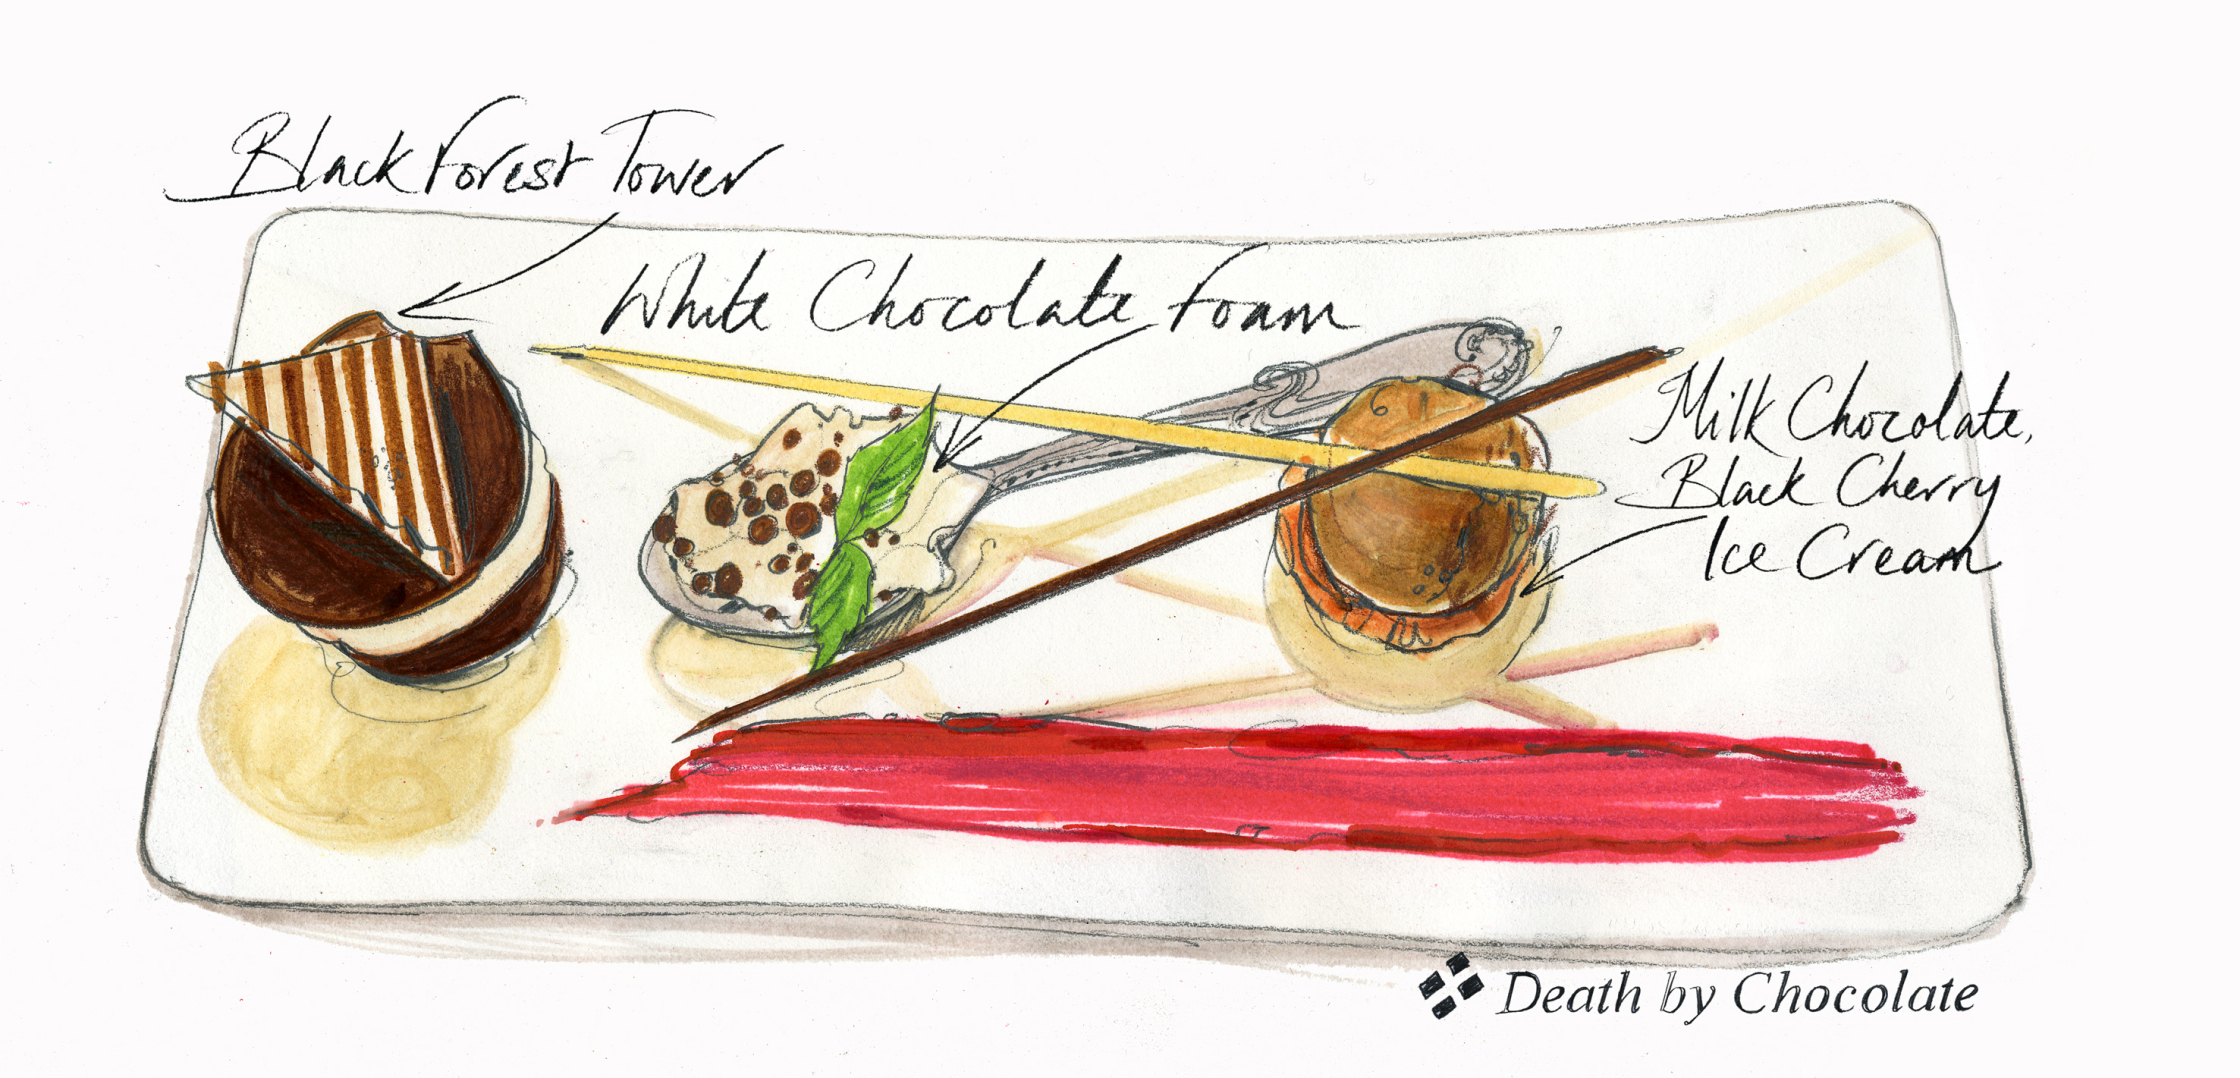 Orient Express Death by Chocolate.jpg